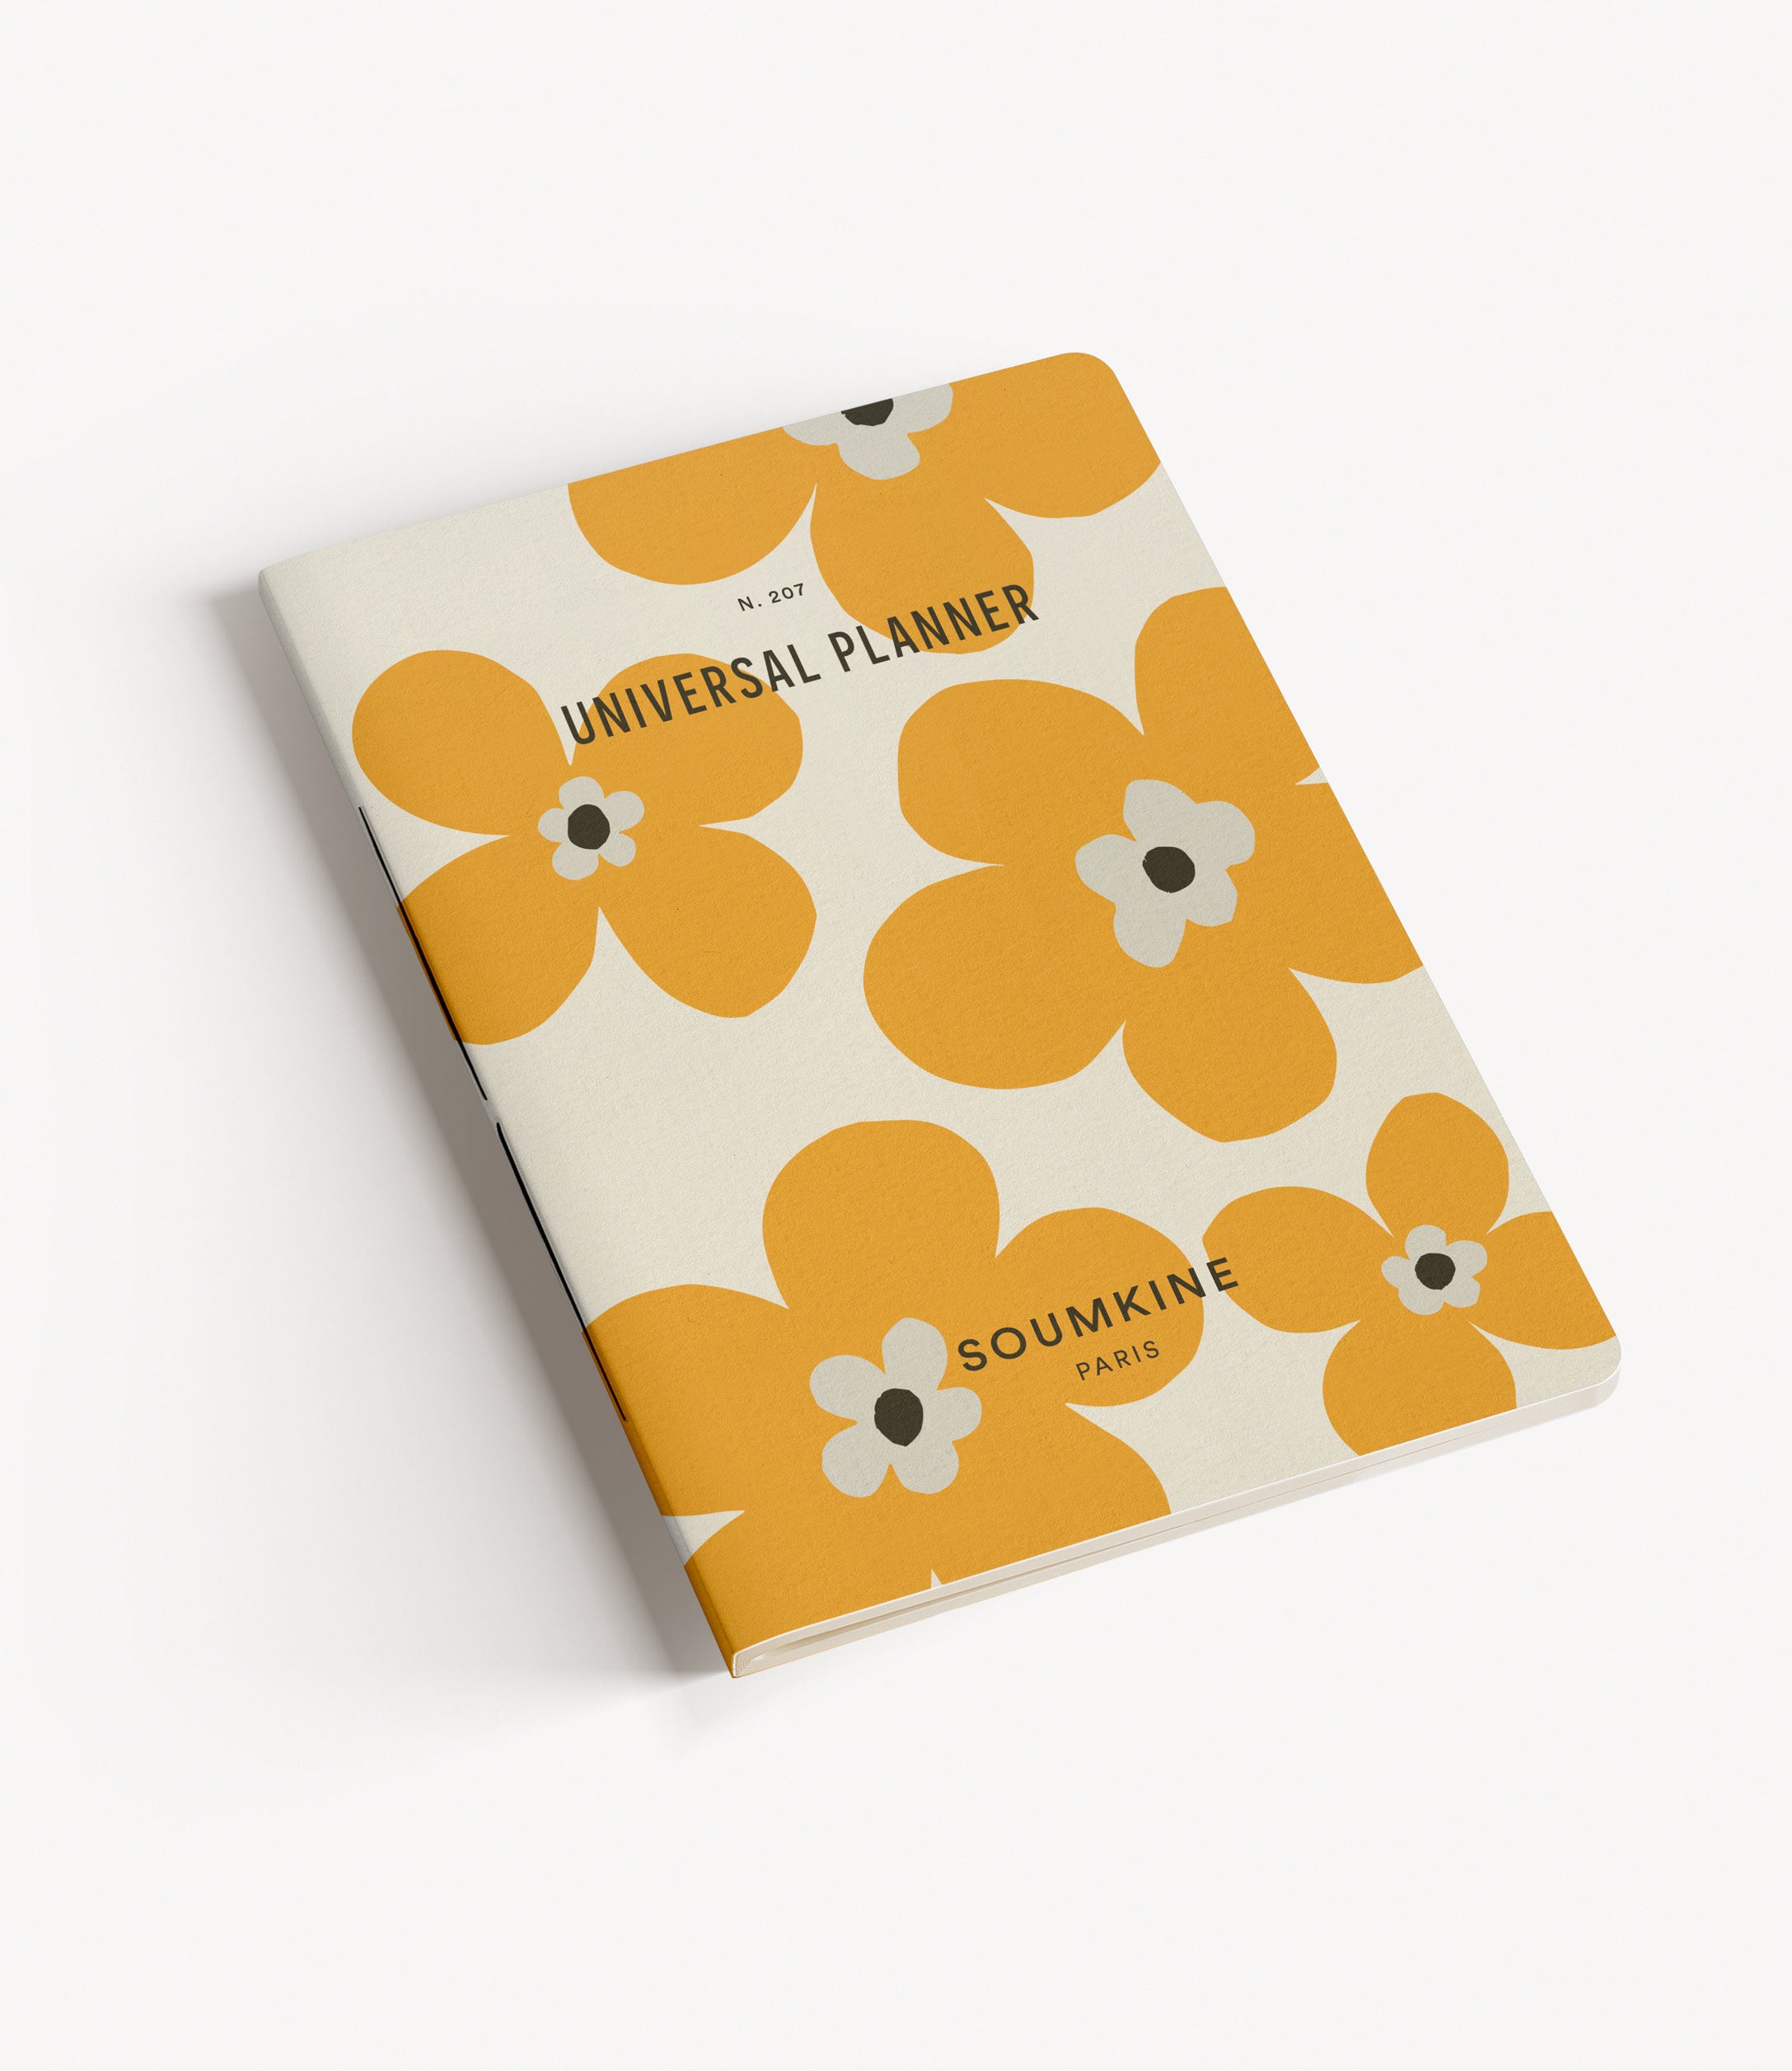 Universal Planner n.207. Mustard Flowers Edition. B6 Size